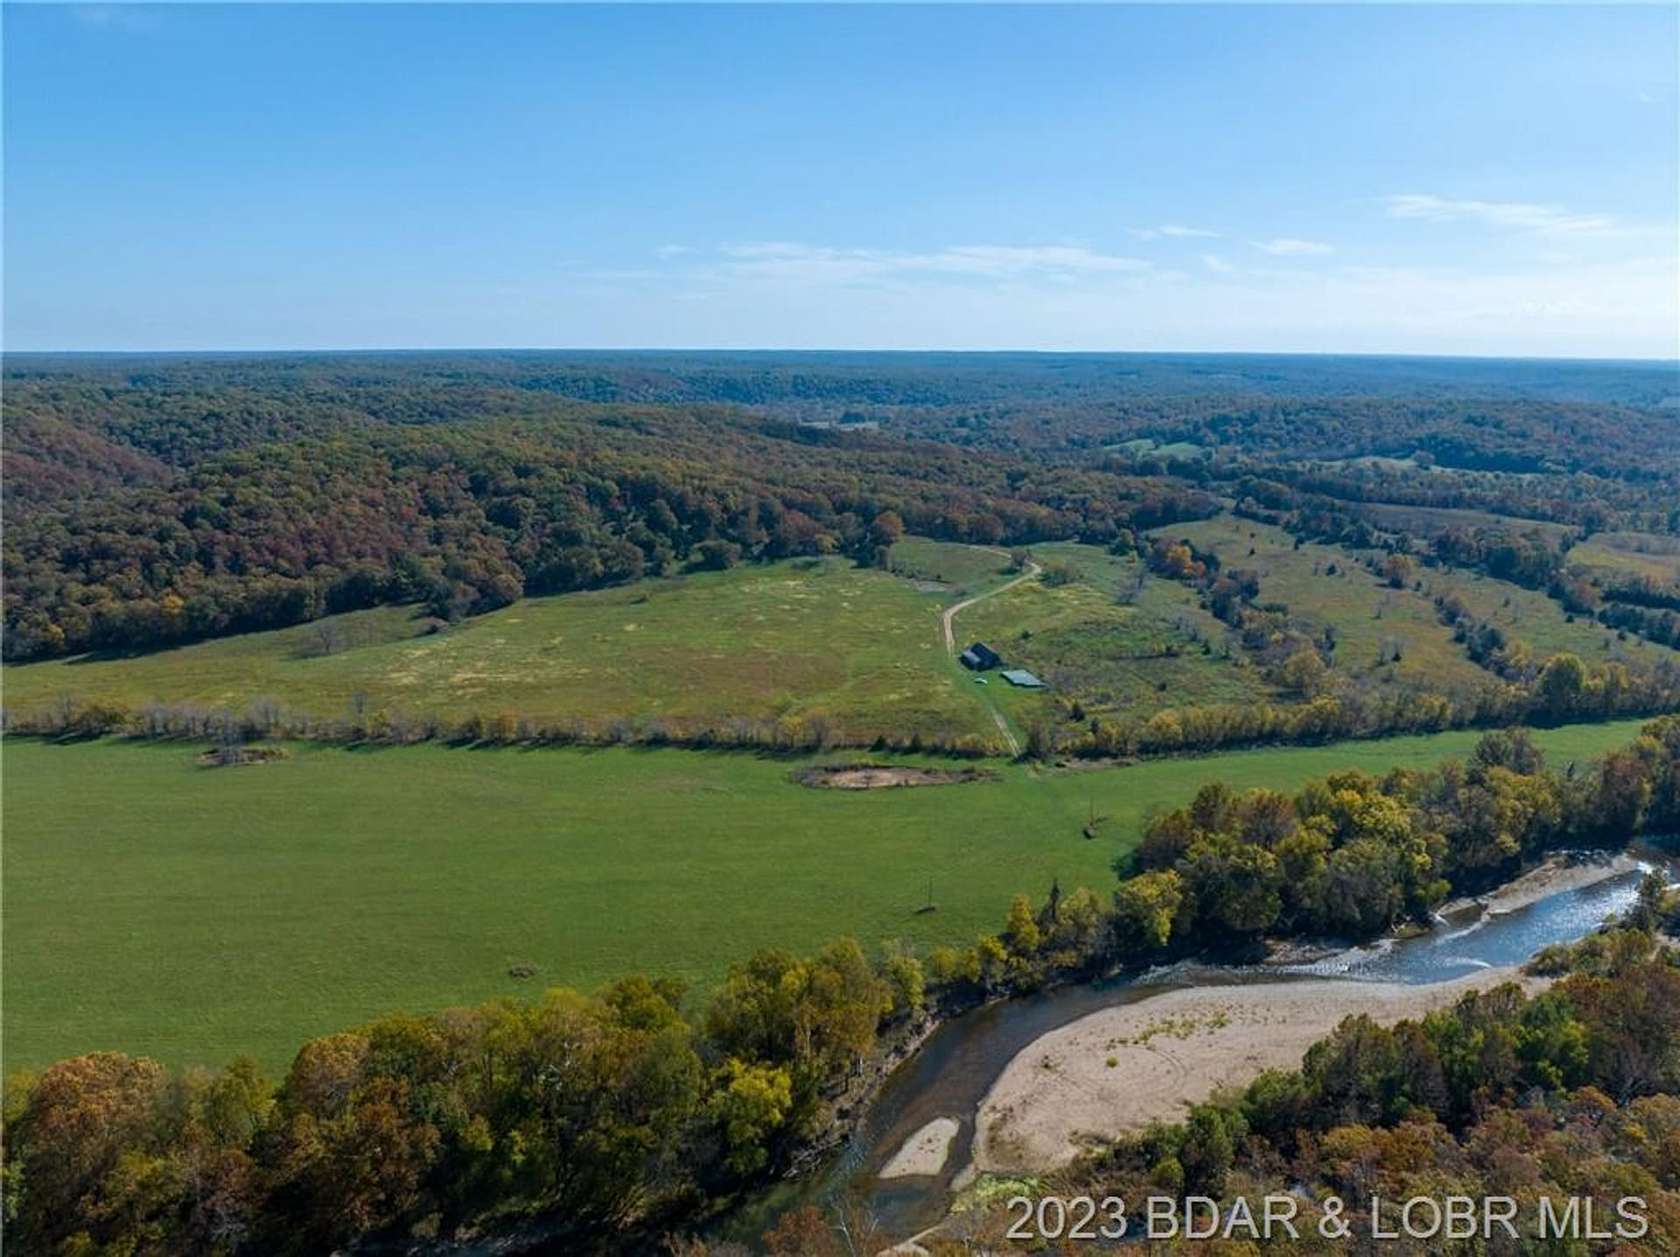 200 Acres of Recreational Land for Sale in Lebanon, Missouri